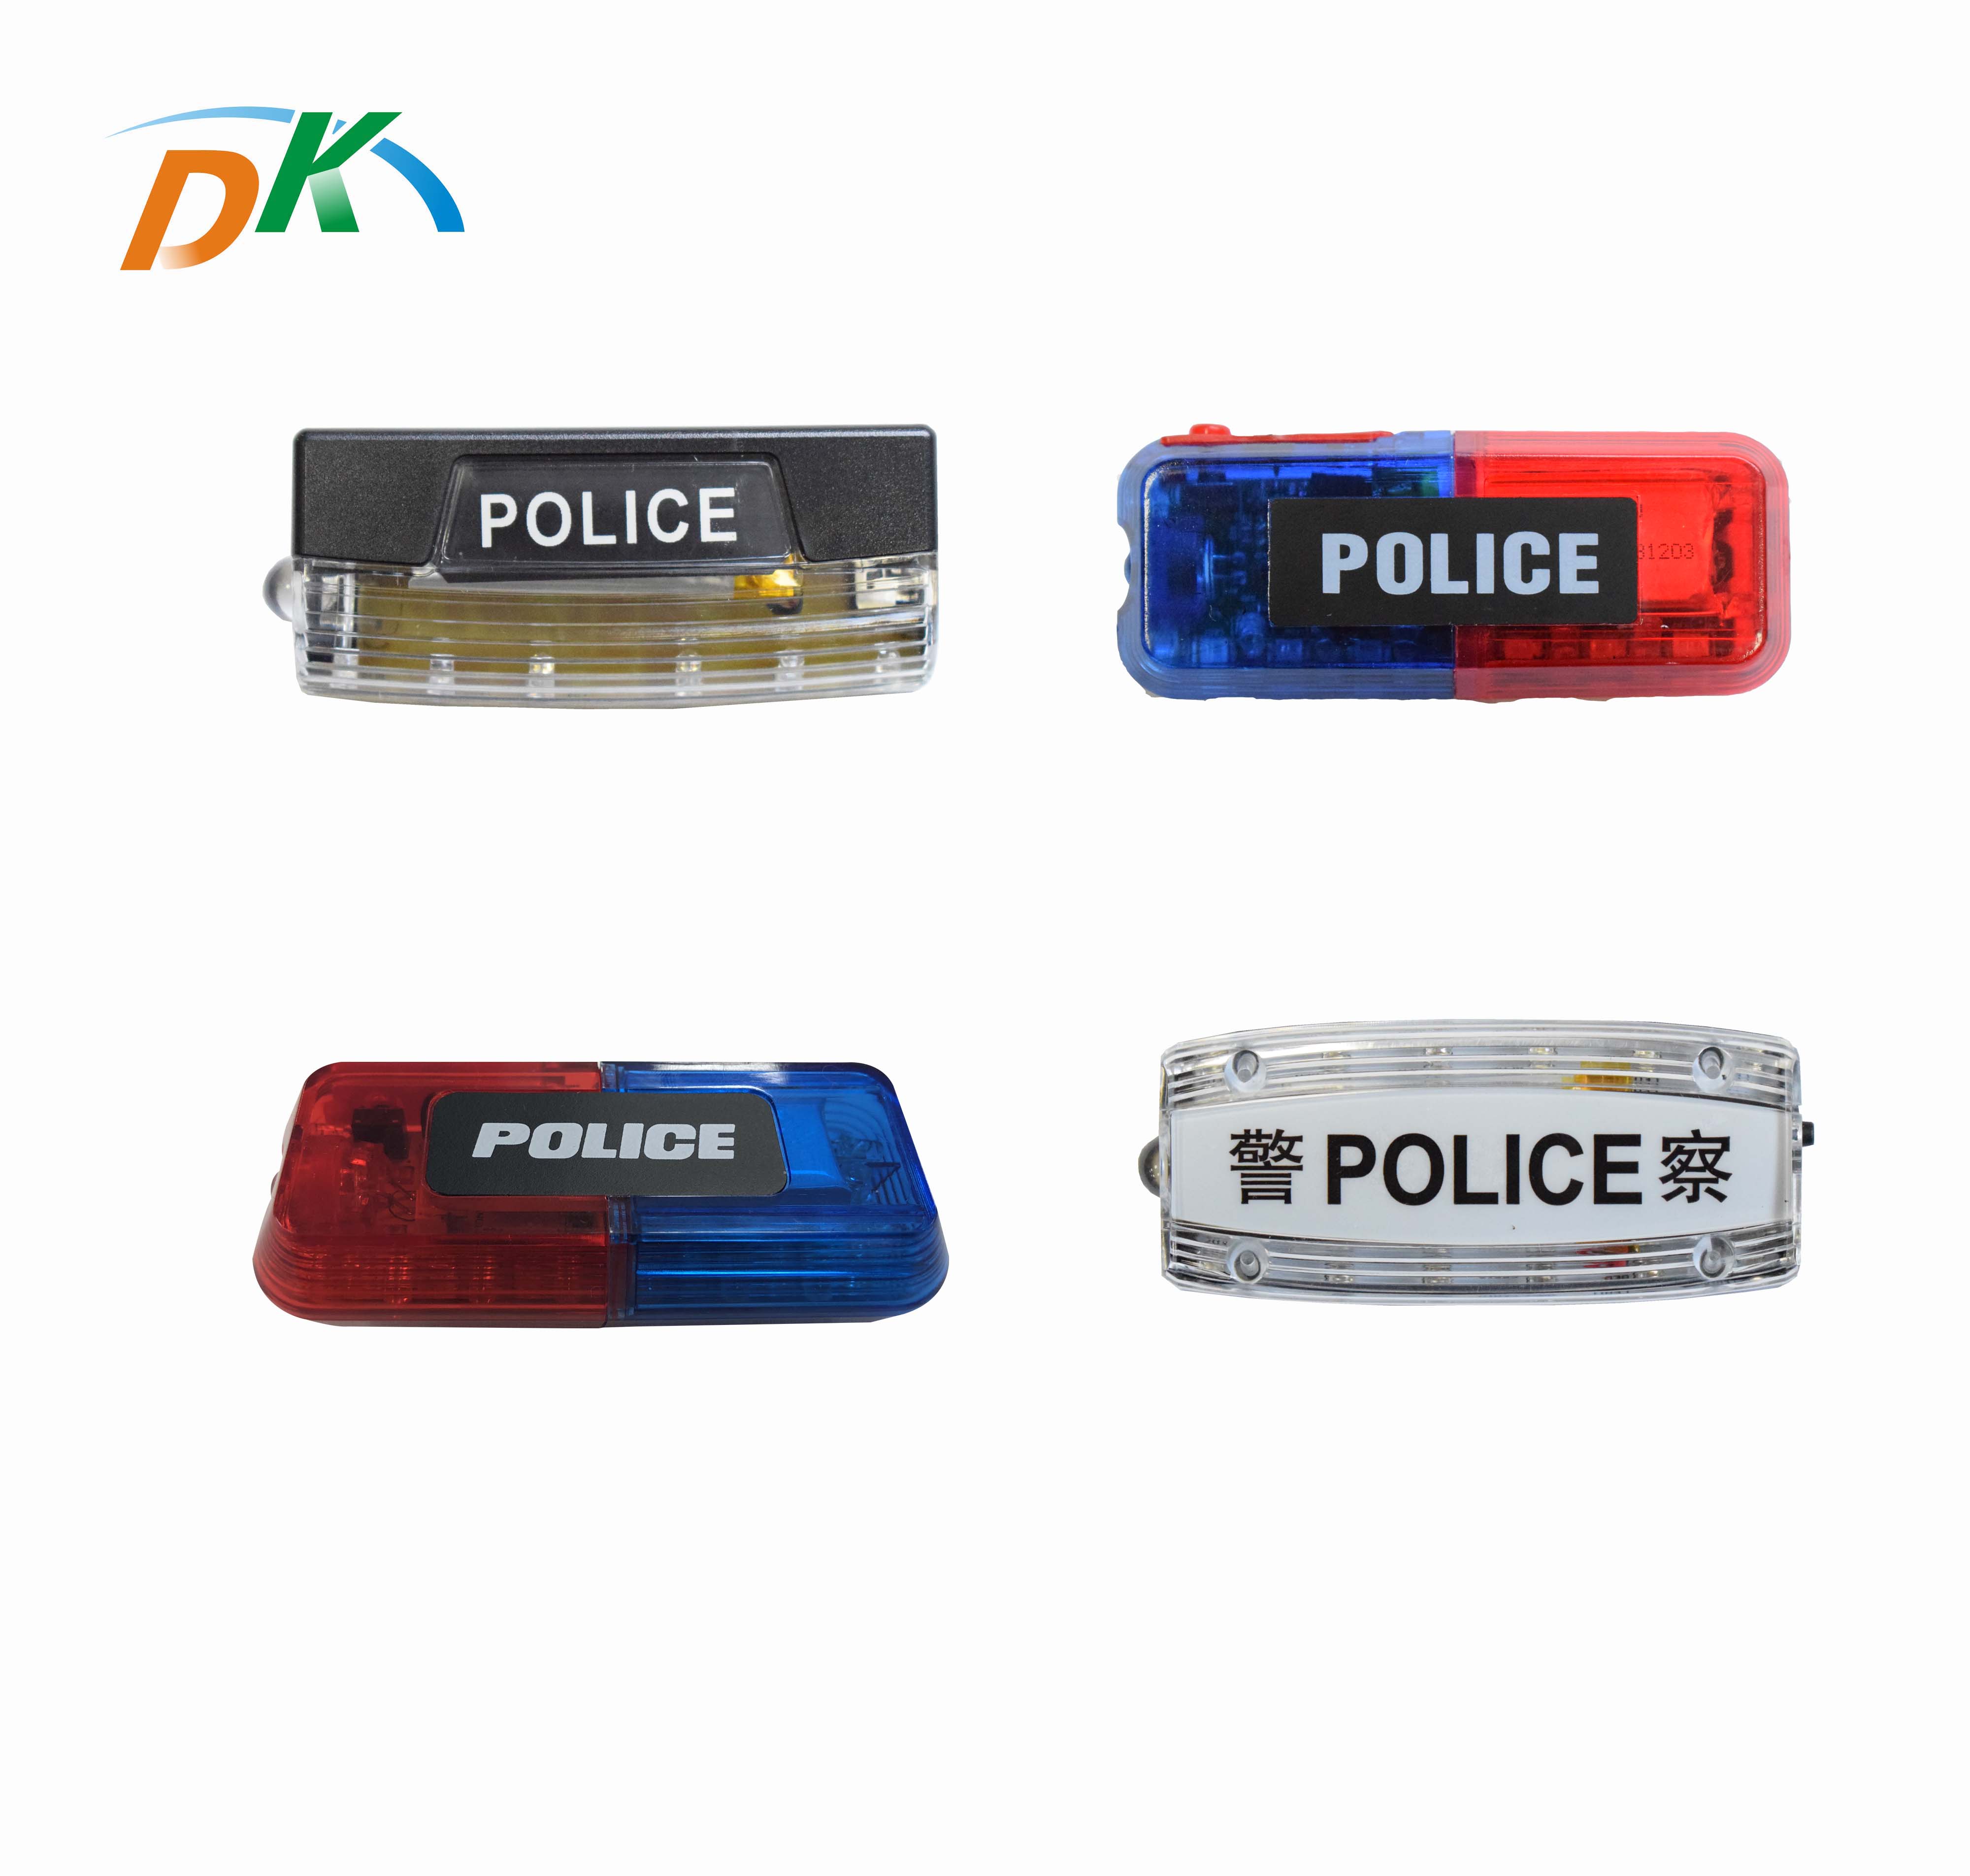 DK police shoulder light led flashing traffic warning light